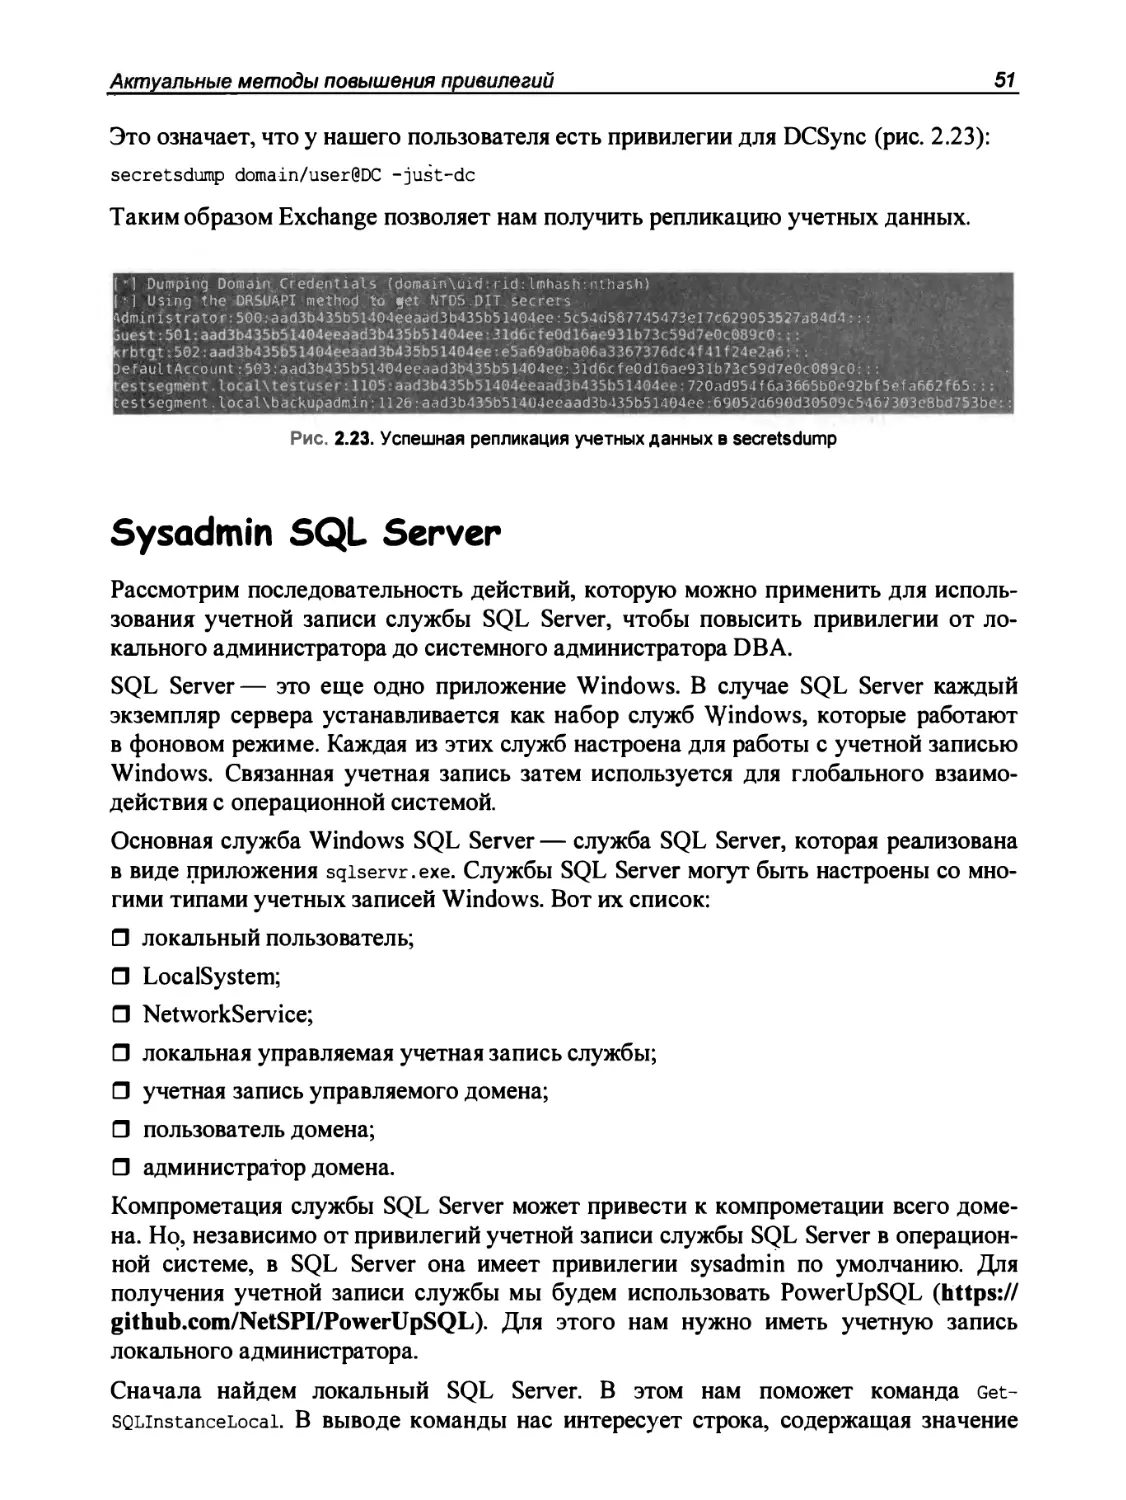 Sysadmin SQL Server